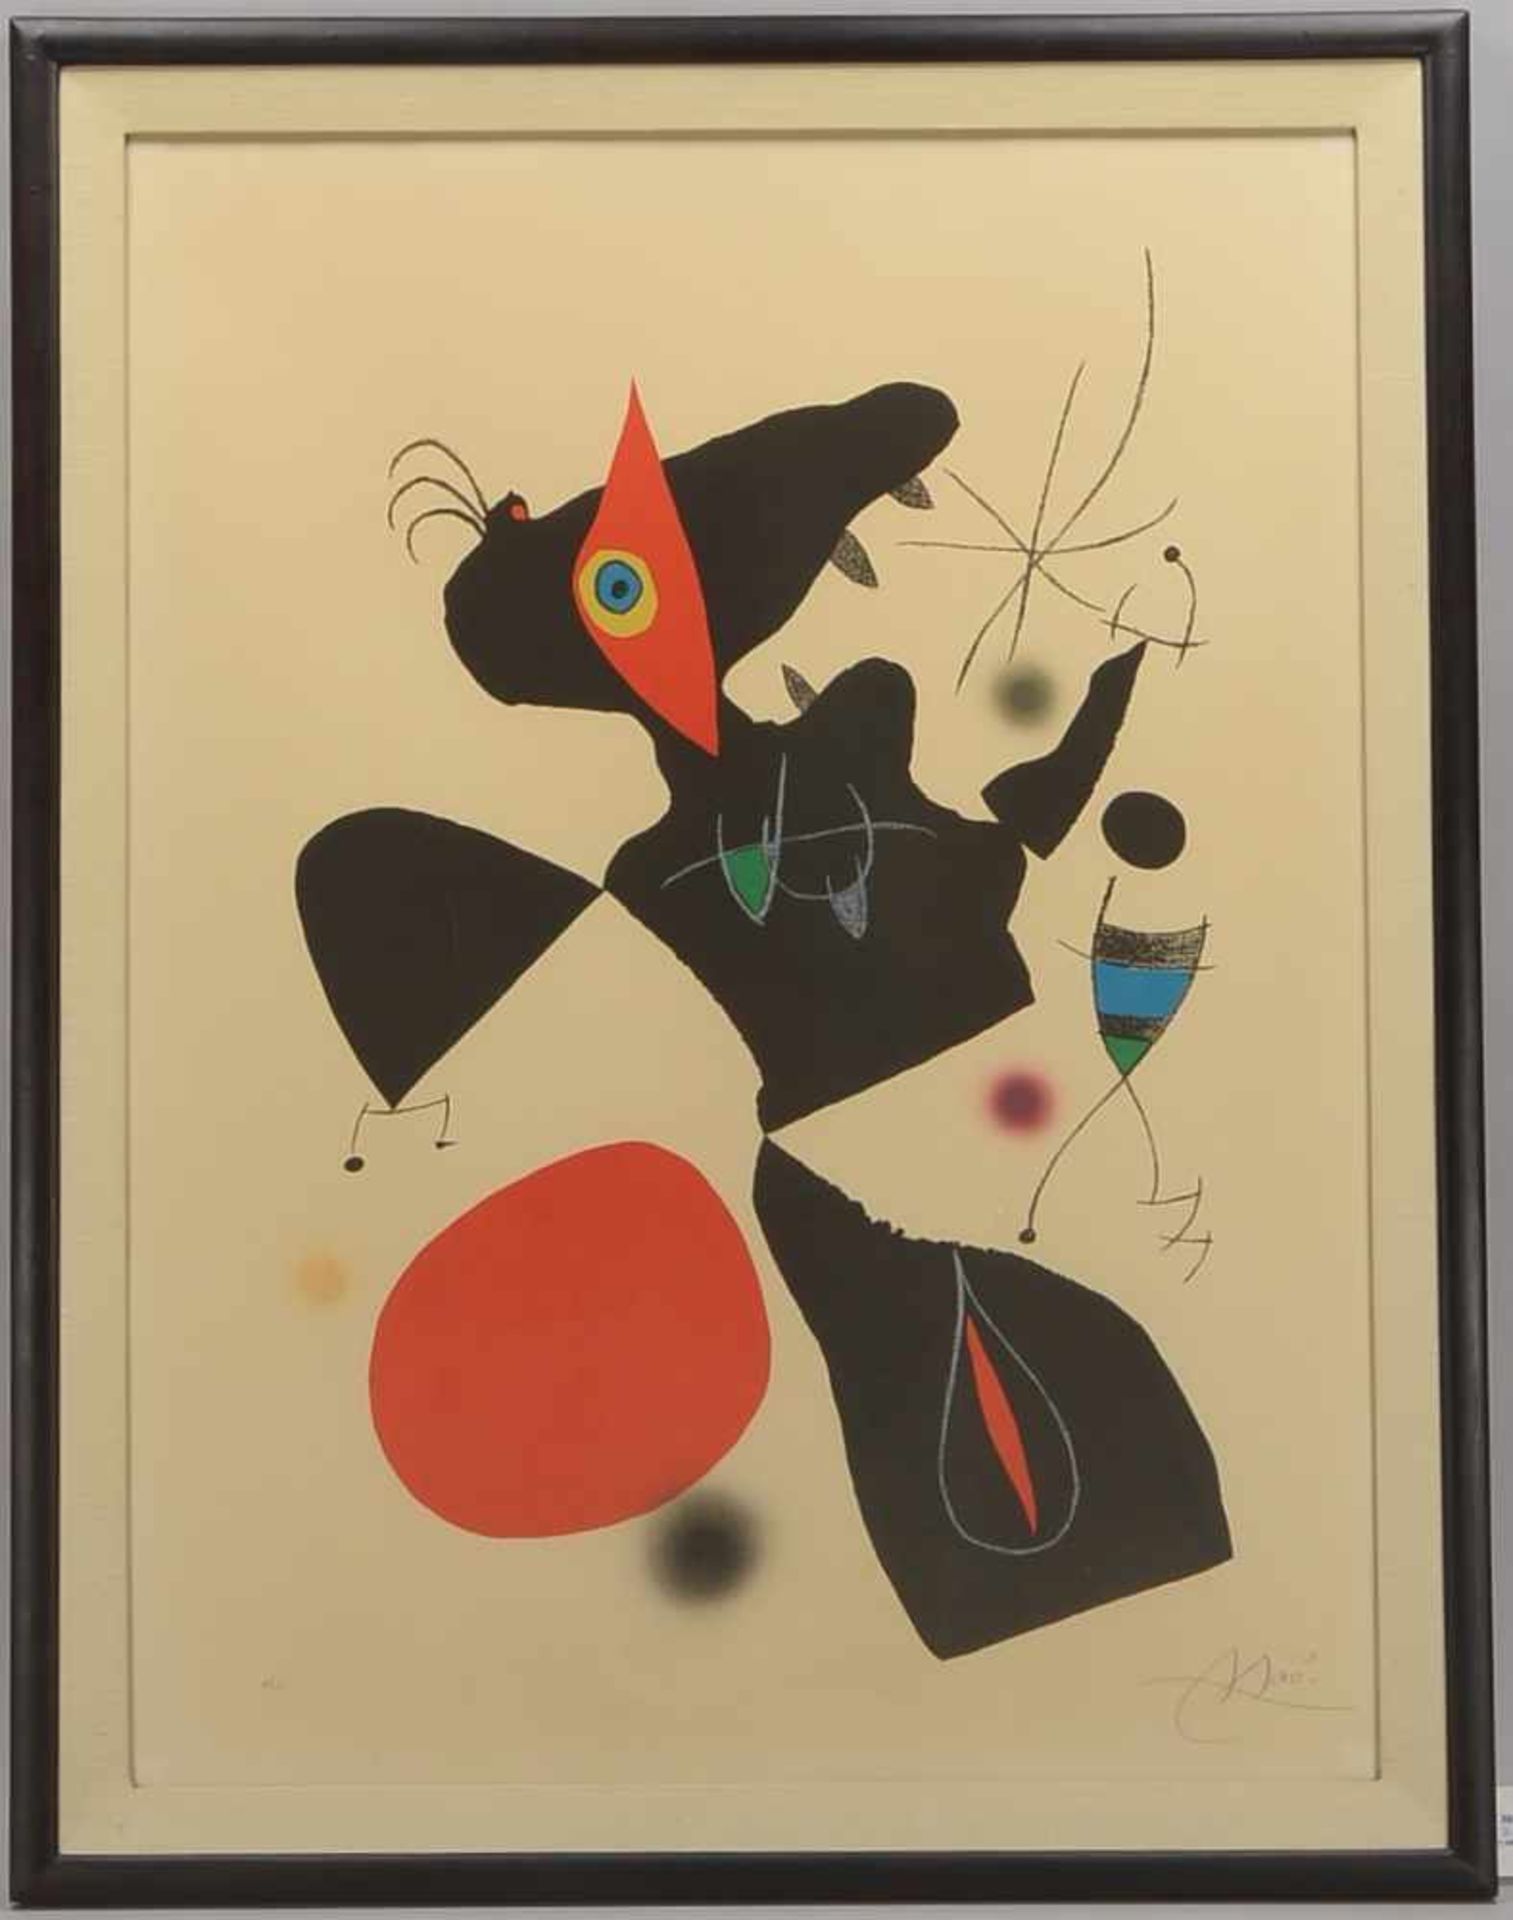 Miró, Joan (1893 - 1983), 'Oda a Joan Miró' (1975, vgl. Cramer 906), Farblithografie auf Velin,